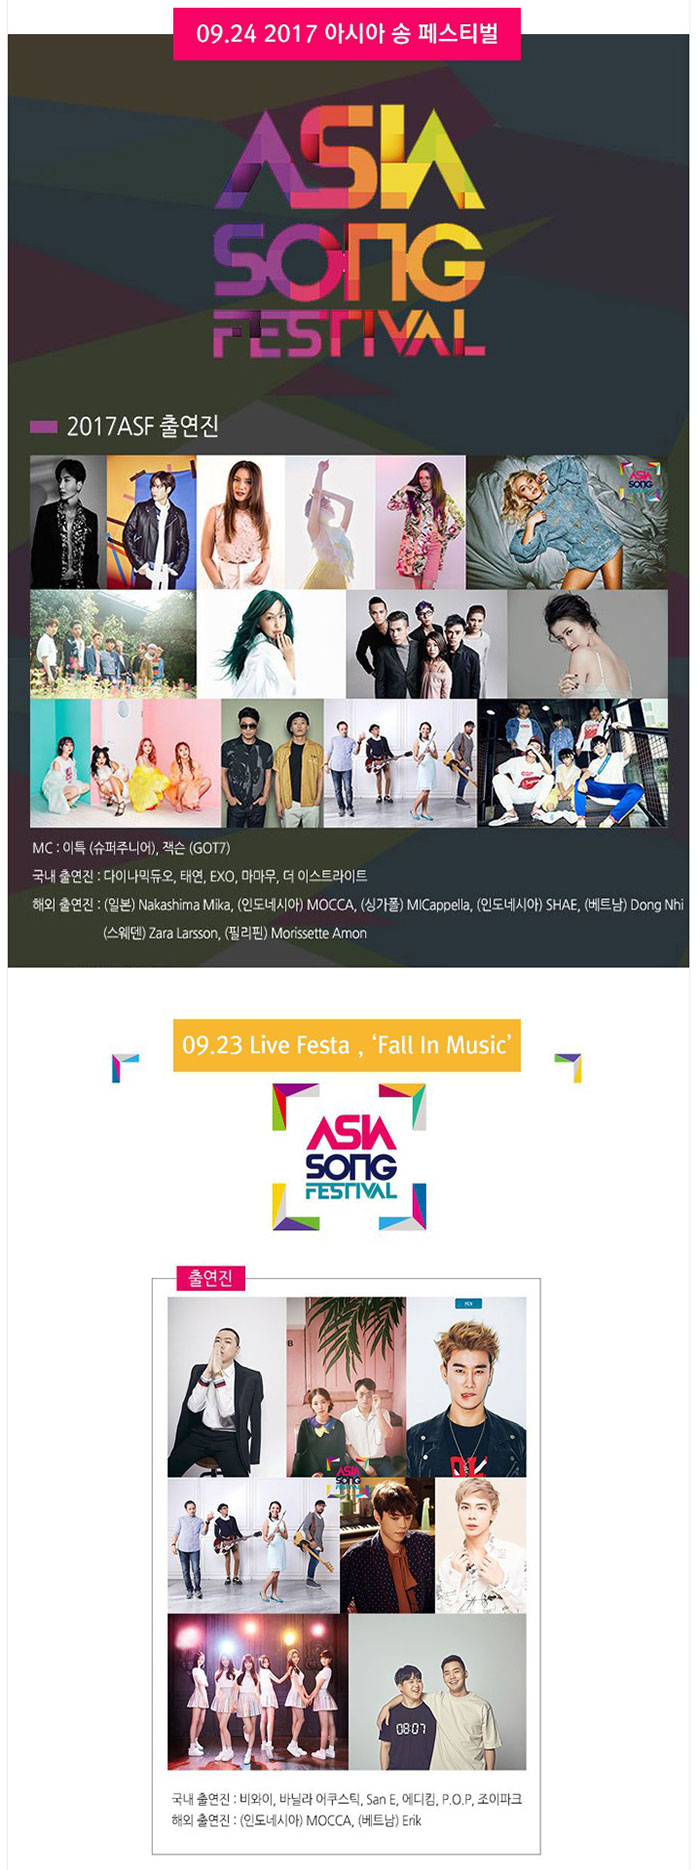 Asia Song Festival 2017